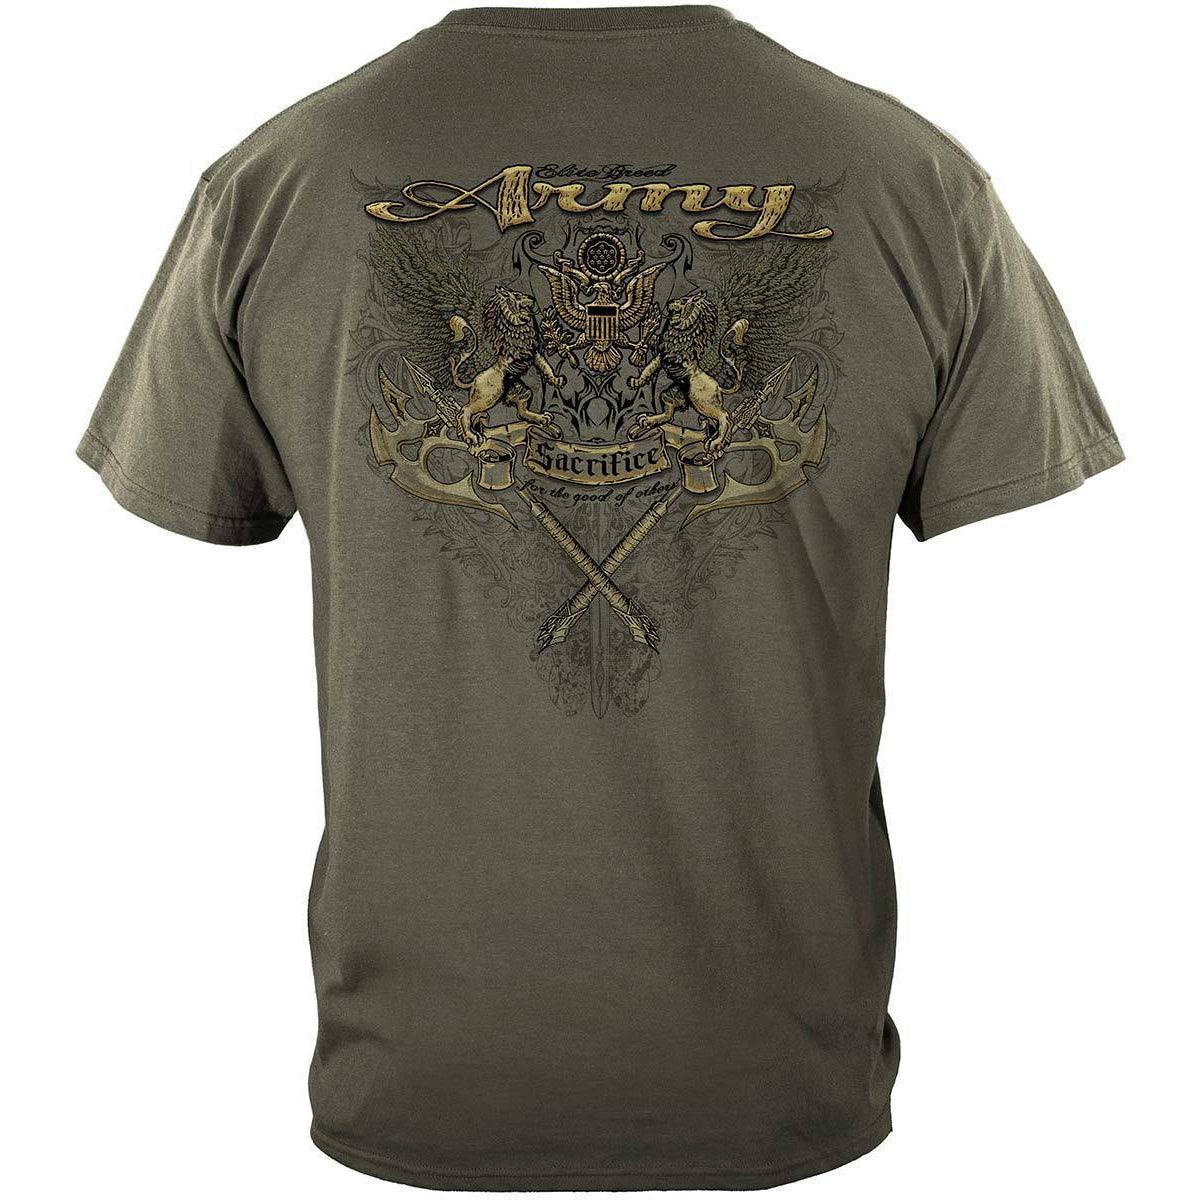 Army Lions Elite Breed Premium Long Sleeve - Military Republic